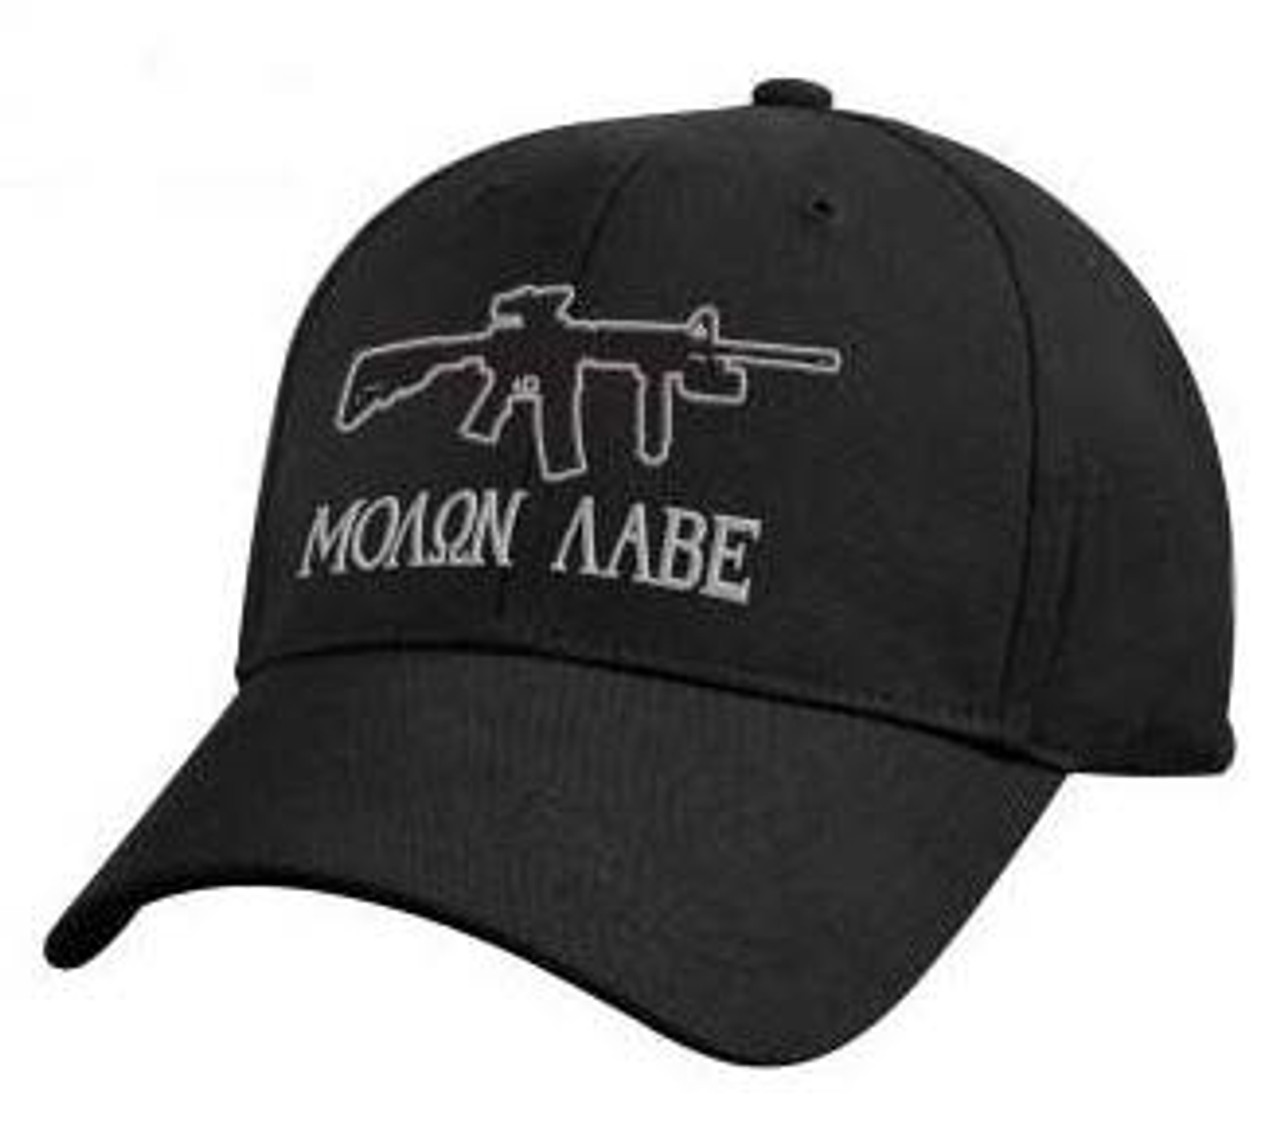 'Molon Labe' Black Deluxe Low Profile Cap from Hessen Antique